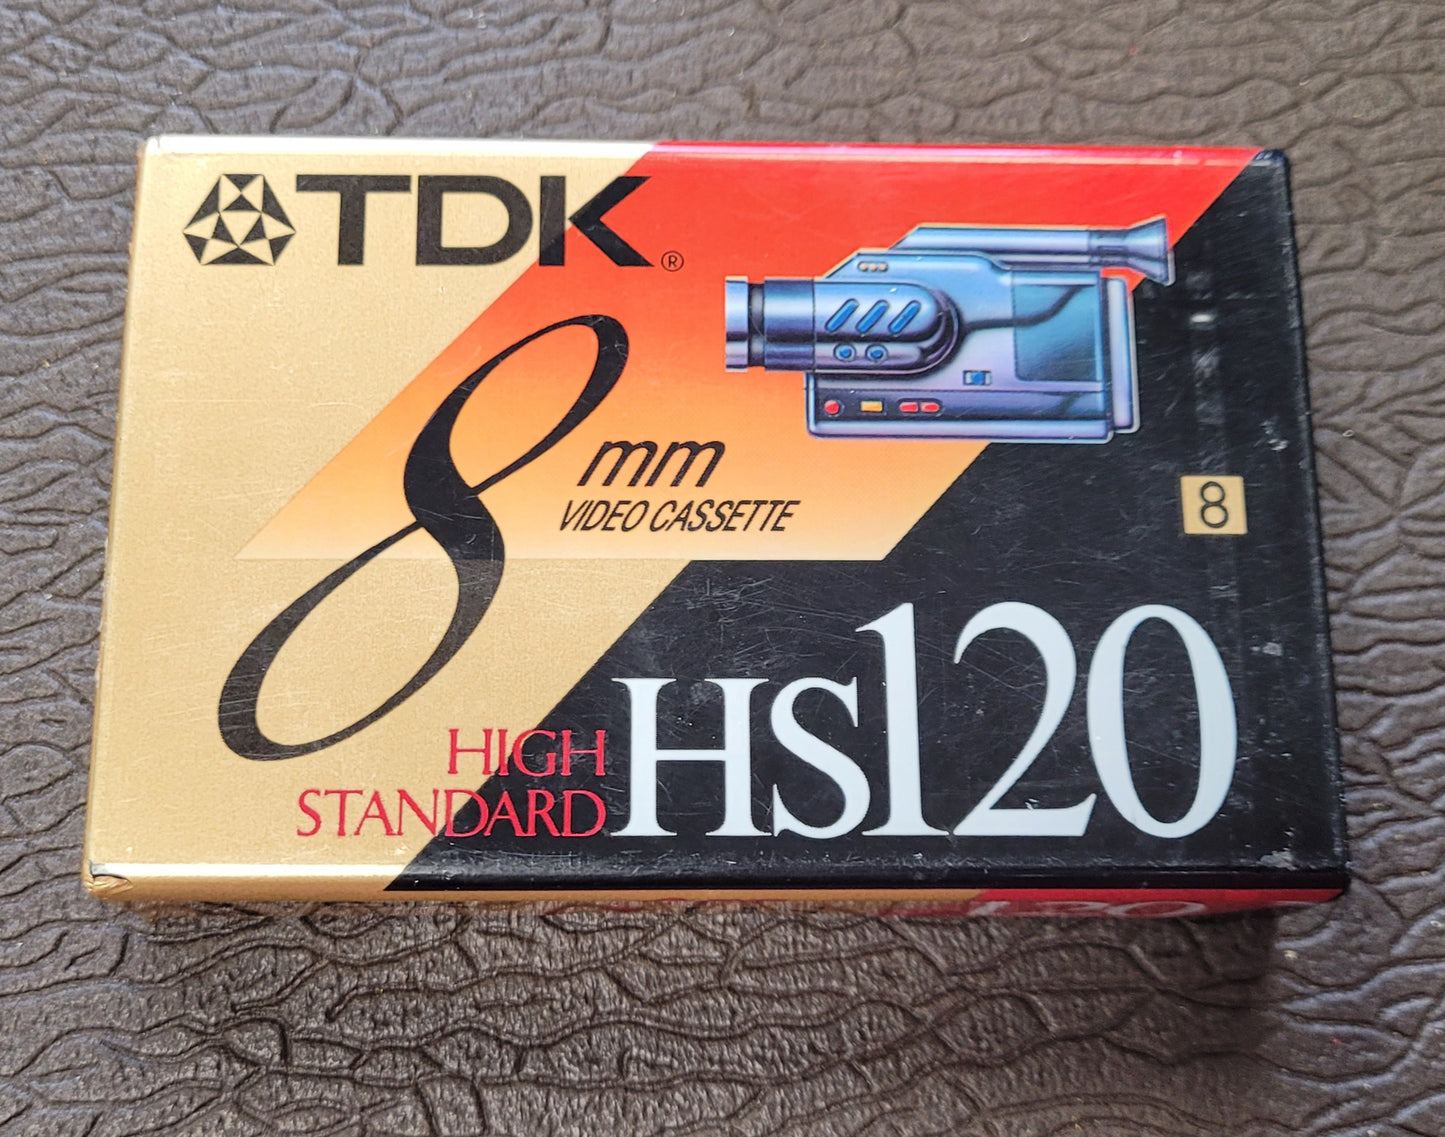 TDK Hi8 HS 120 Cassette